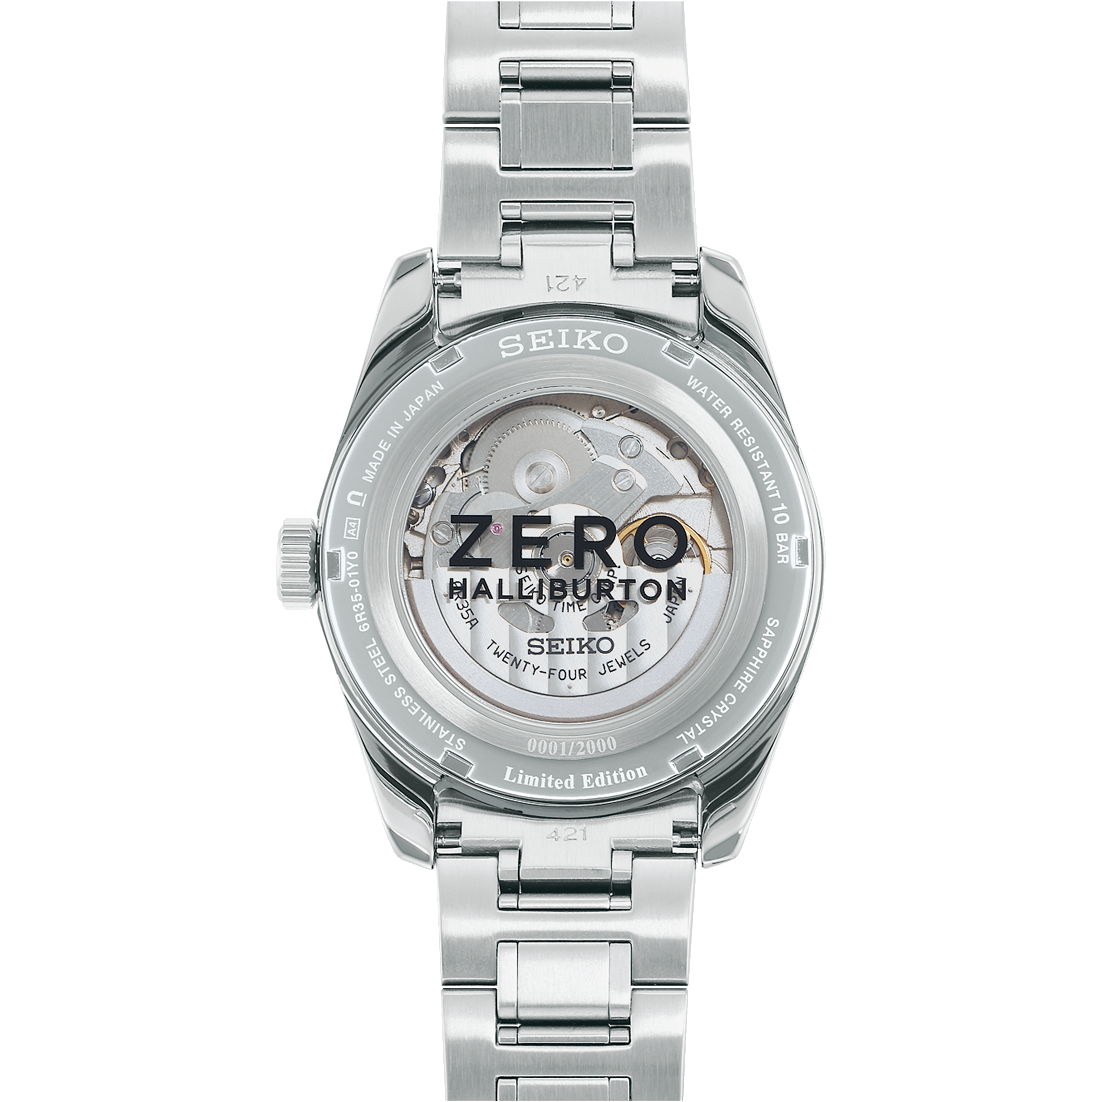 Seiko Presage - Sharp Edge series - Zero Halliburton Limited Edition